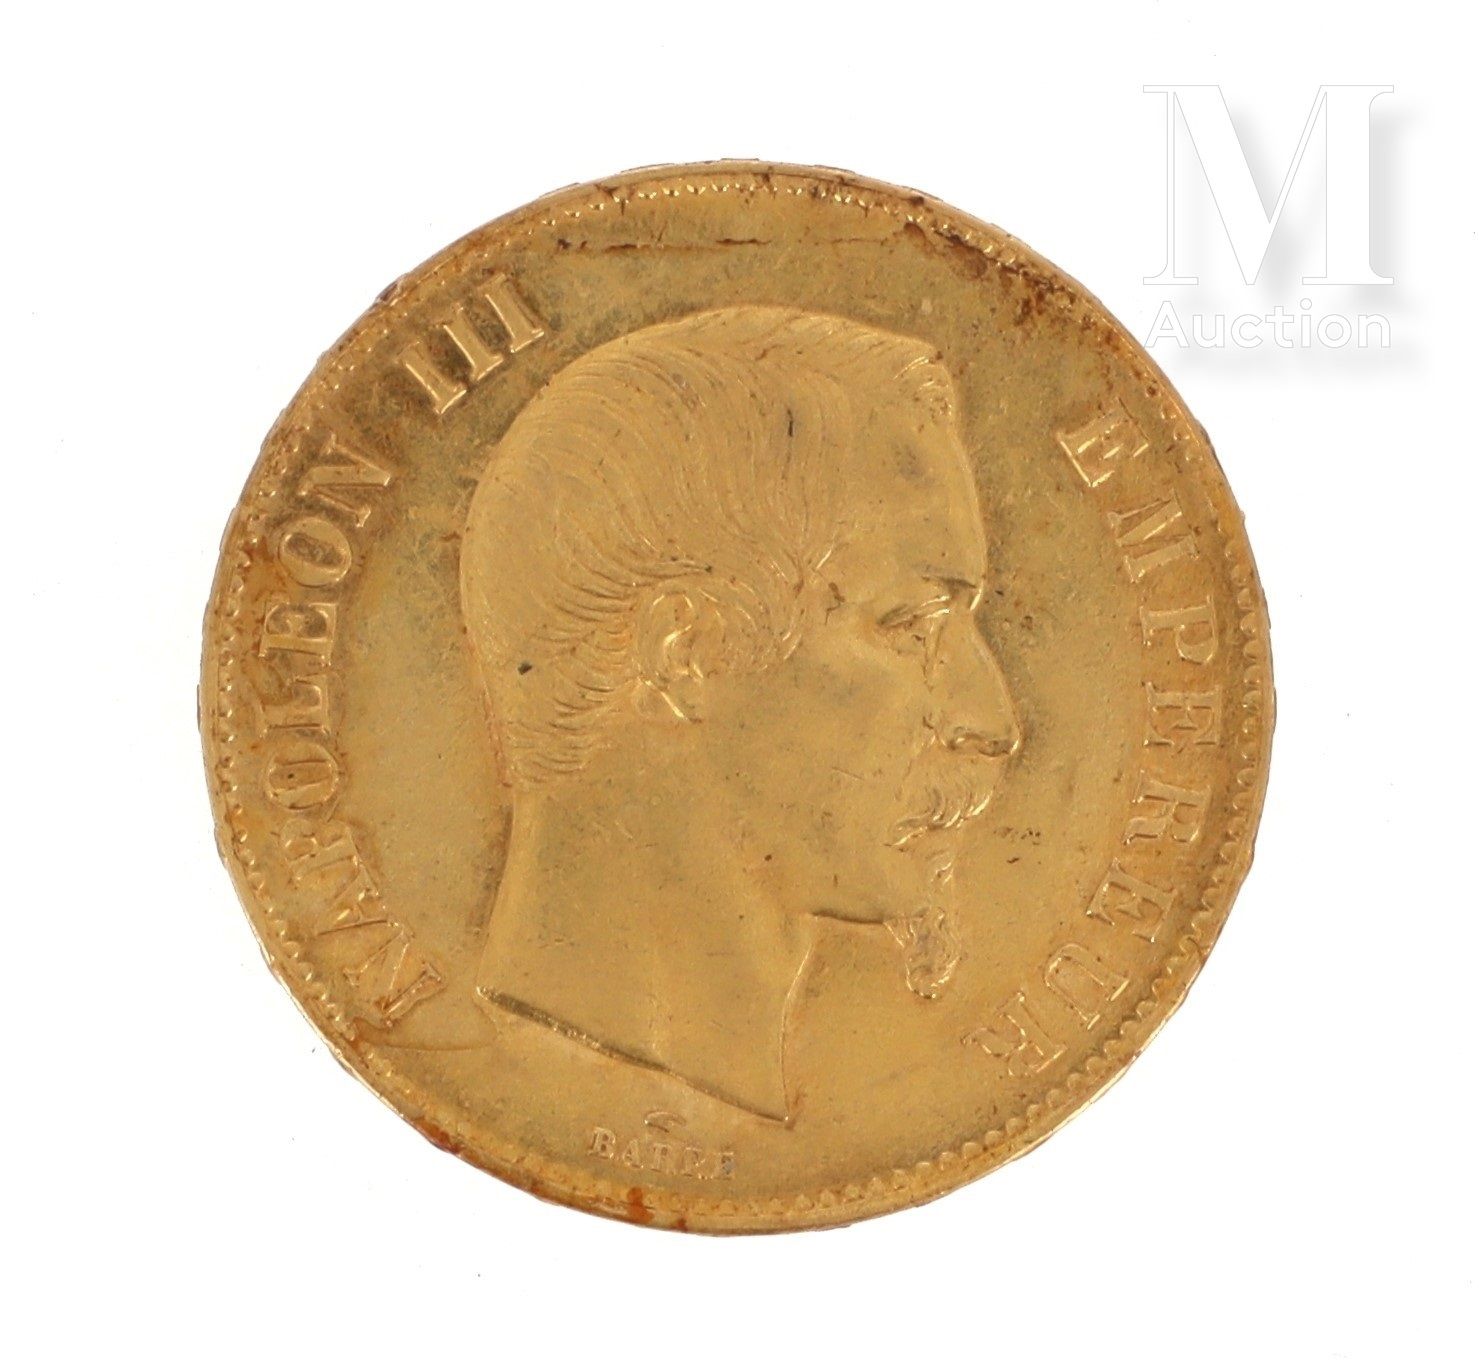 Pièce 100 FF or Une pièce en or de 100 FF Napoléon III tête nue 

1858 A